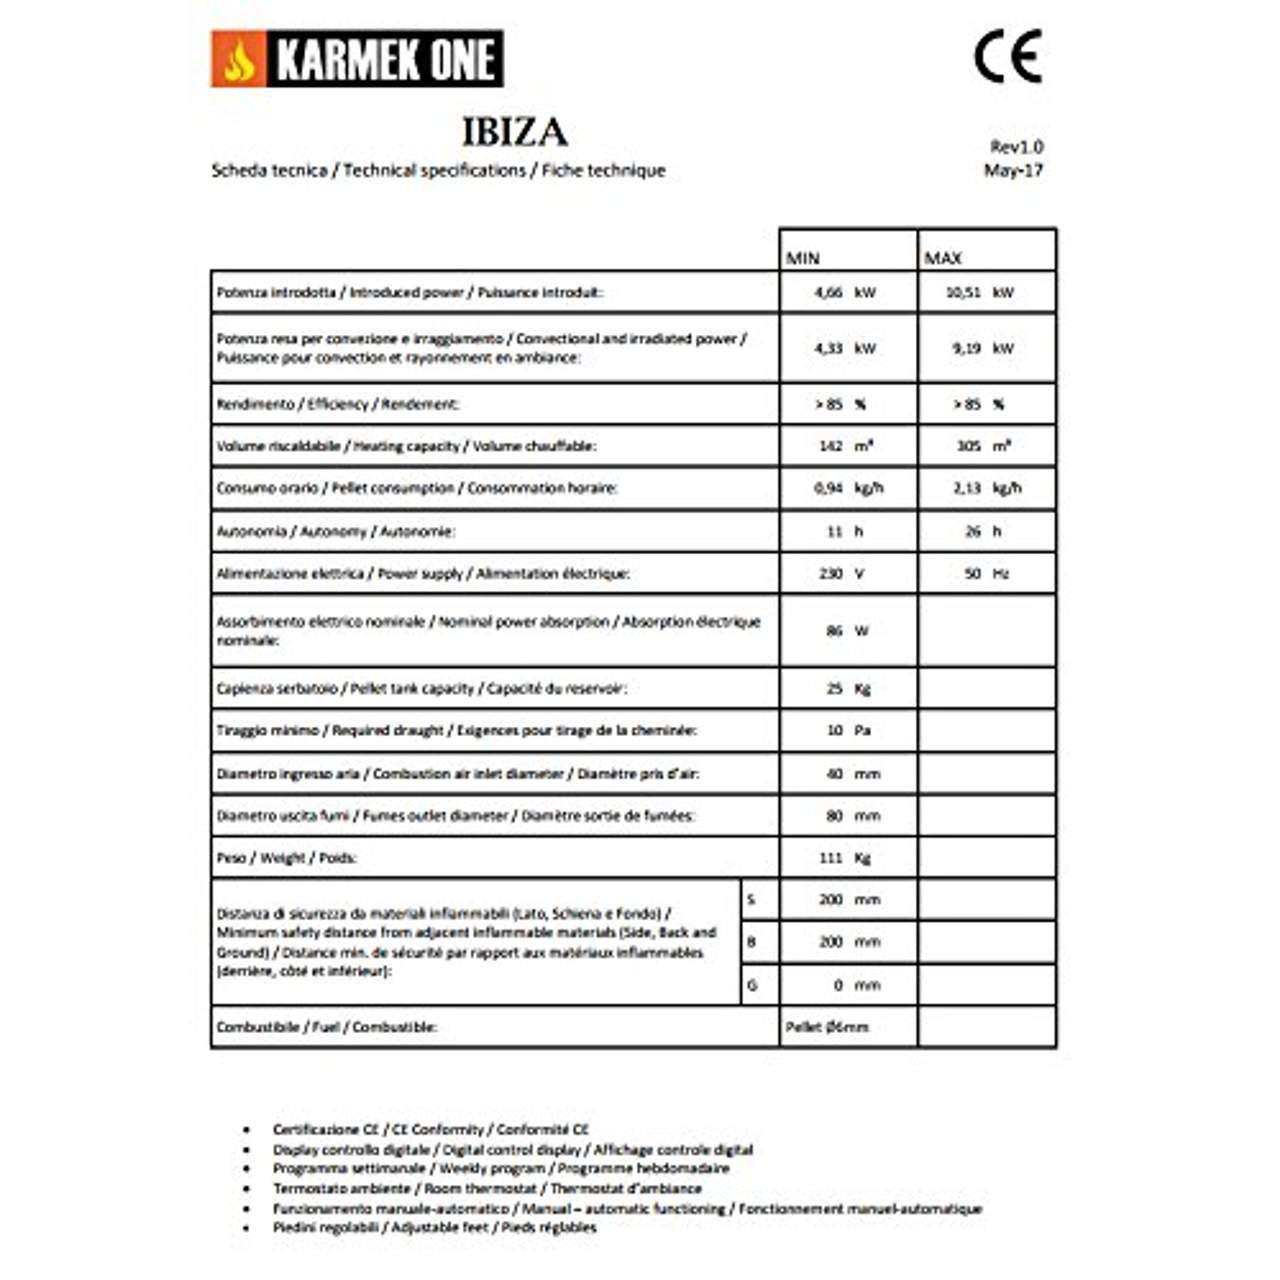 karmek One Ibiza-10,51 KW